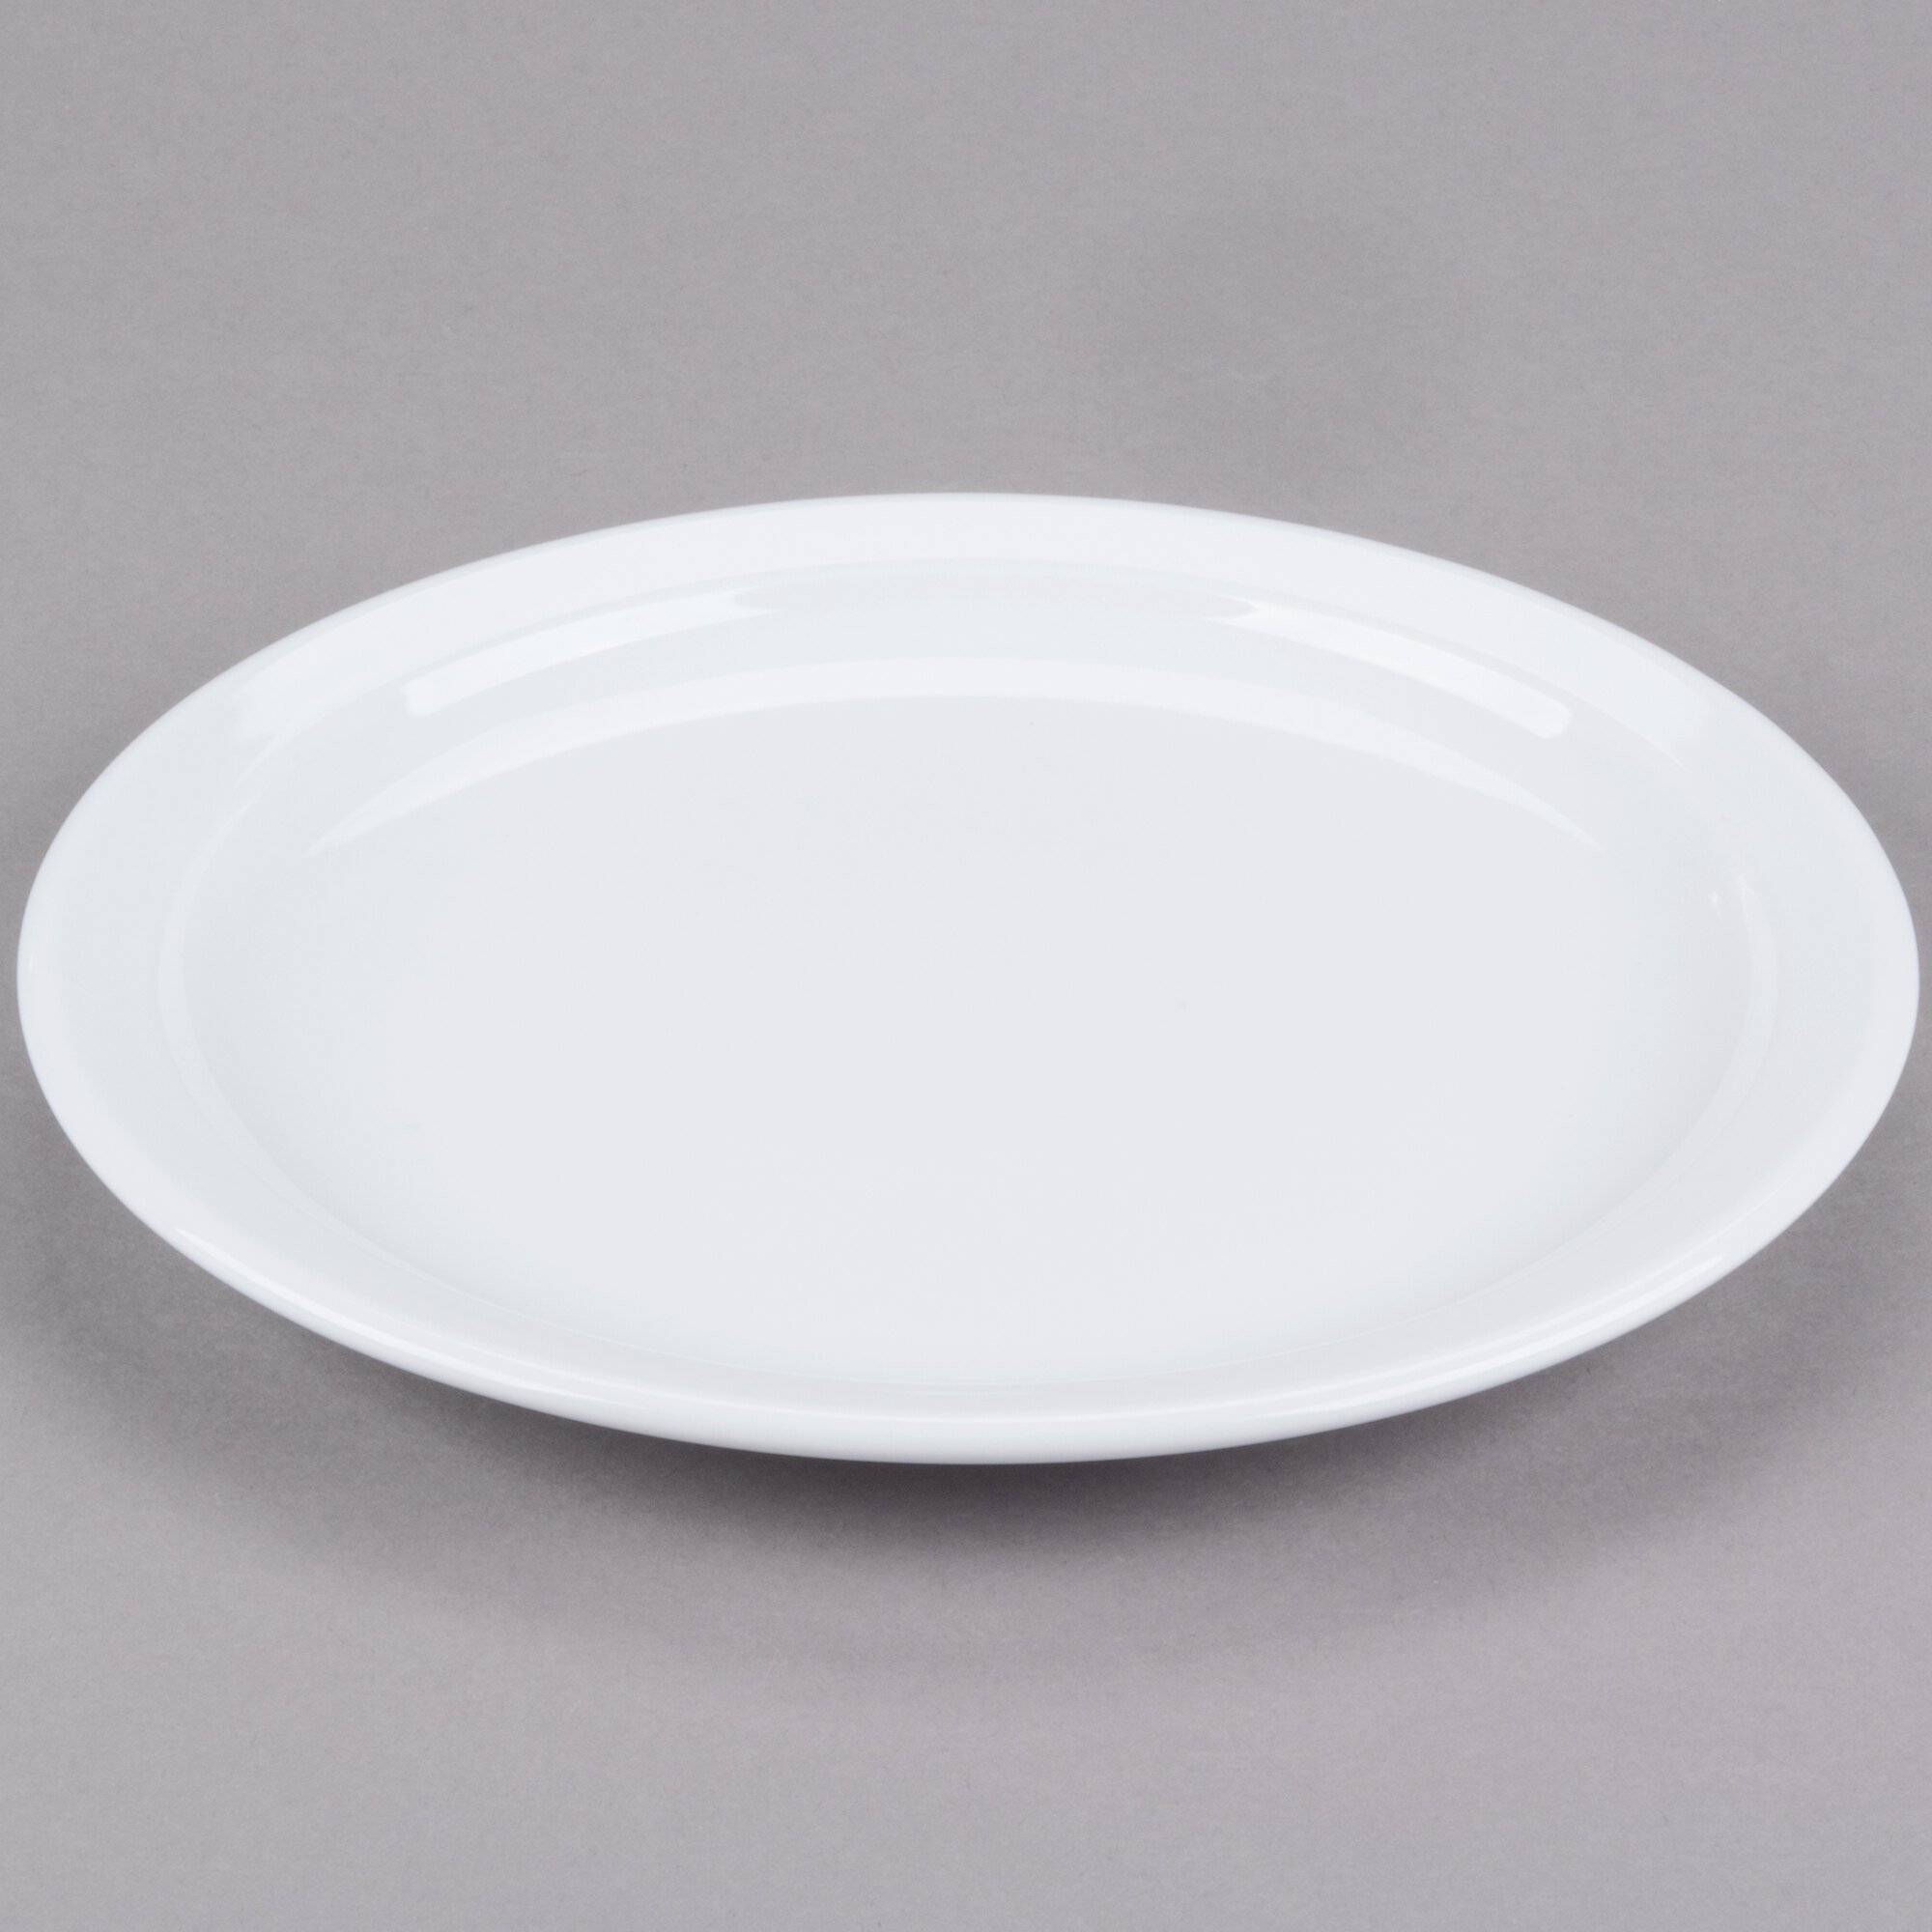 Cambro Mdsplt9148 Classic White Ceramic Ware 9 Ceramic Plate 24 Case